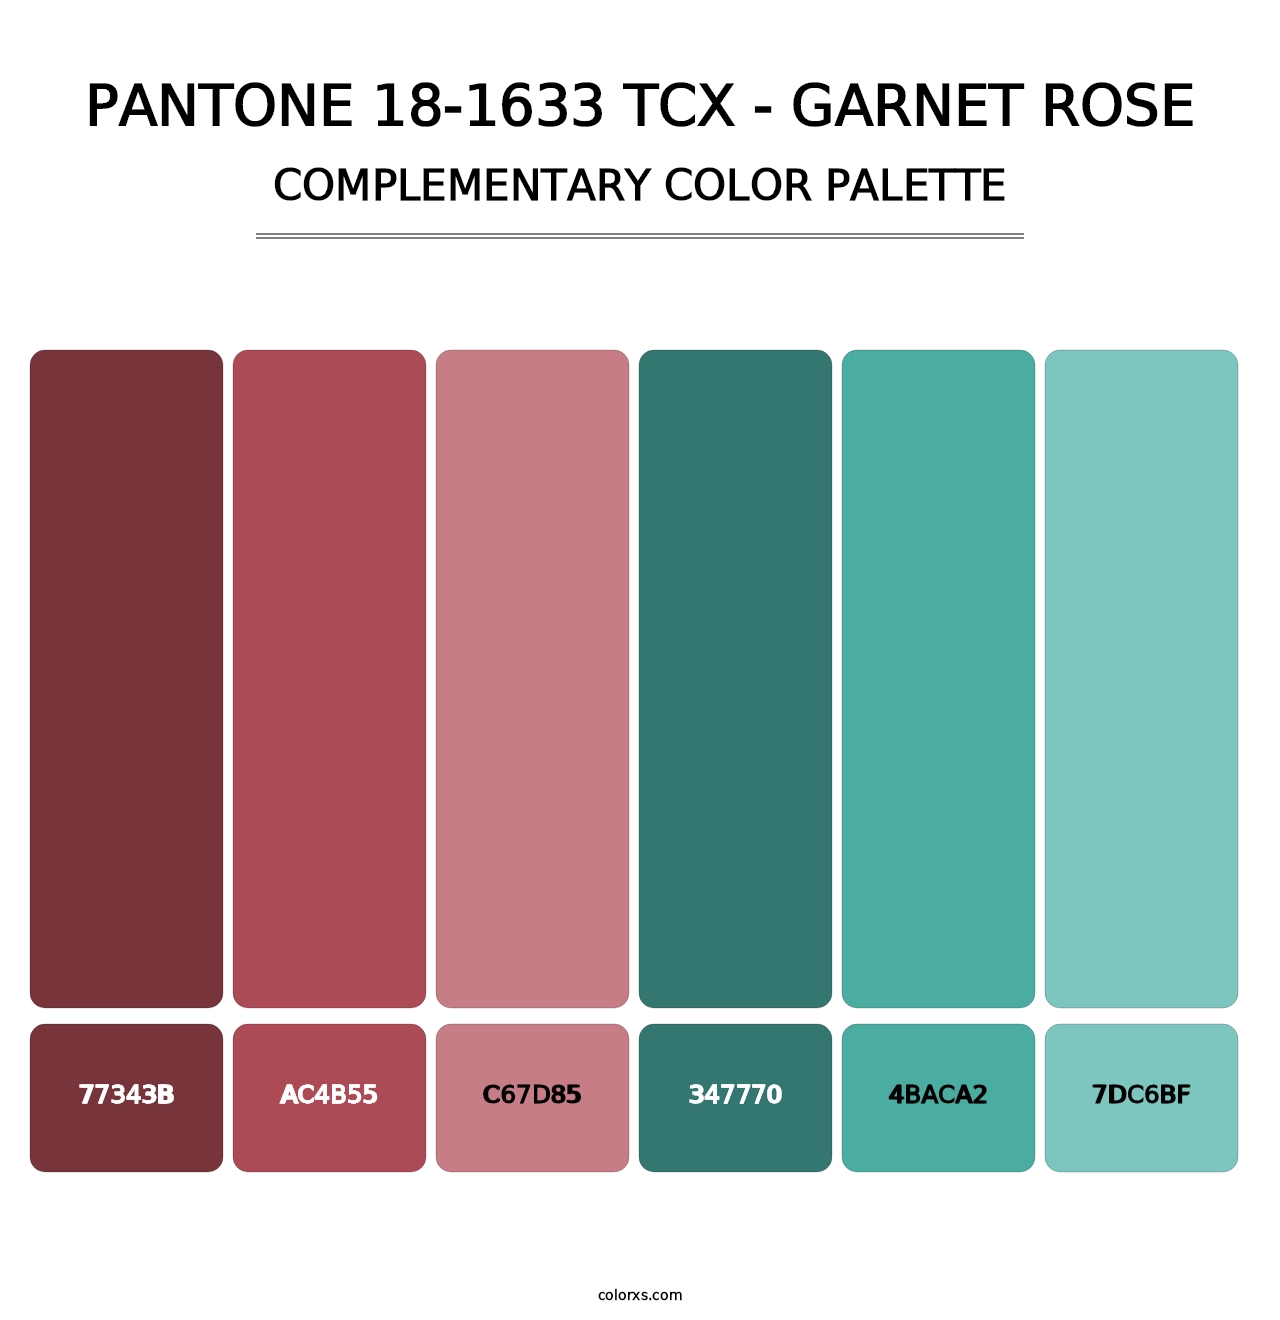 PANTONE 18-1633 TCX - Garnet Rose - Complementary Color Palette